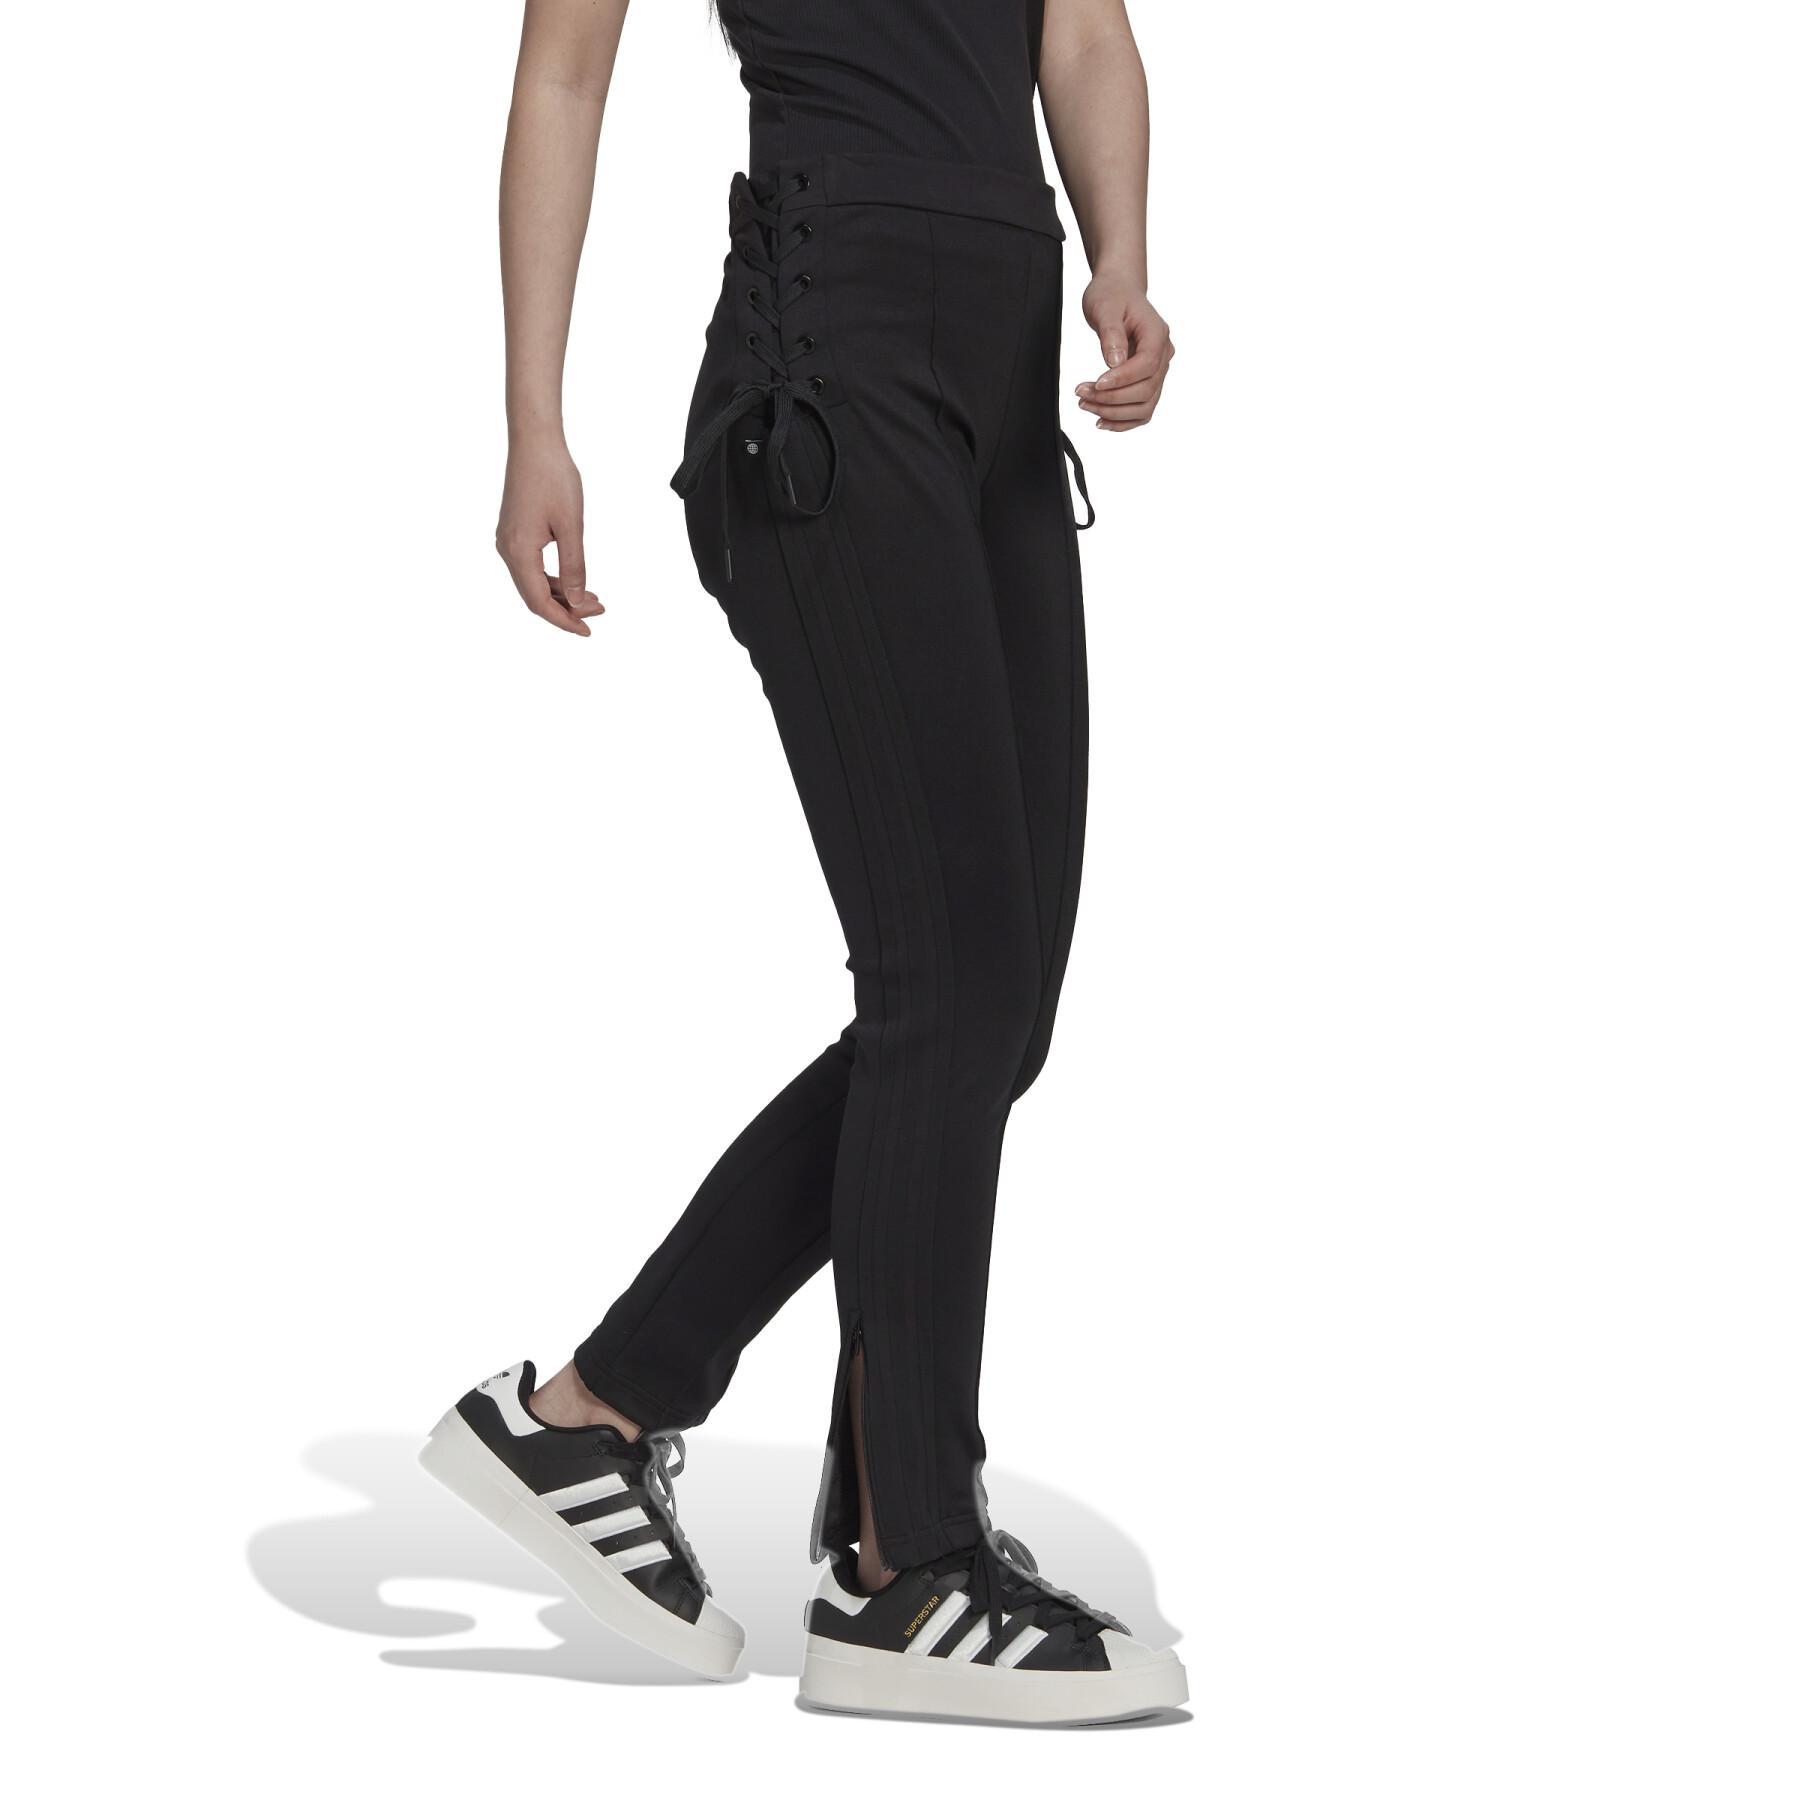 Women's slim-fit lace-up jogging suit adidas Originals Always